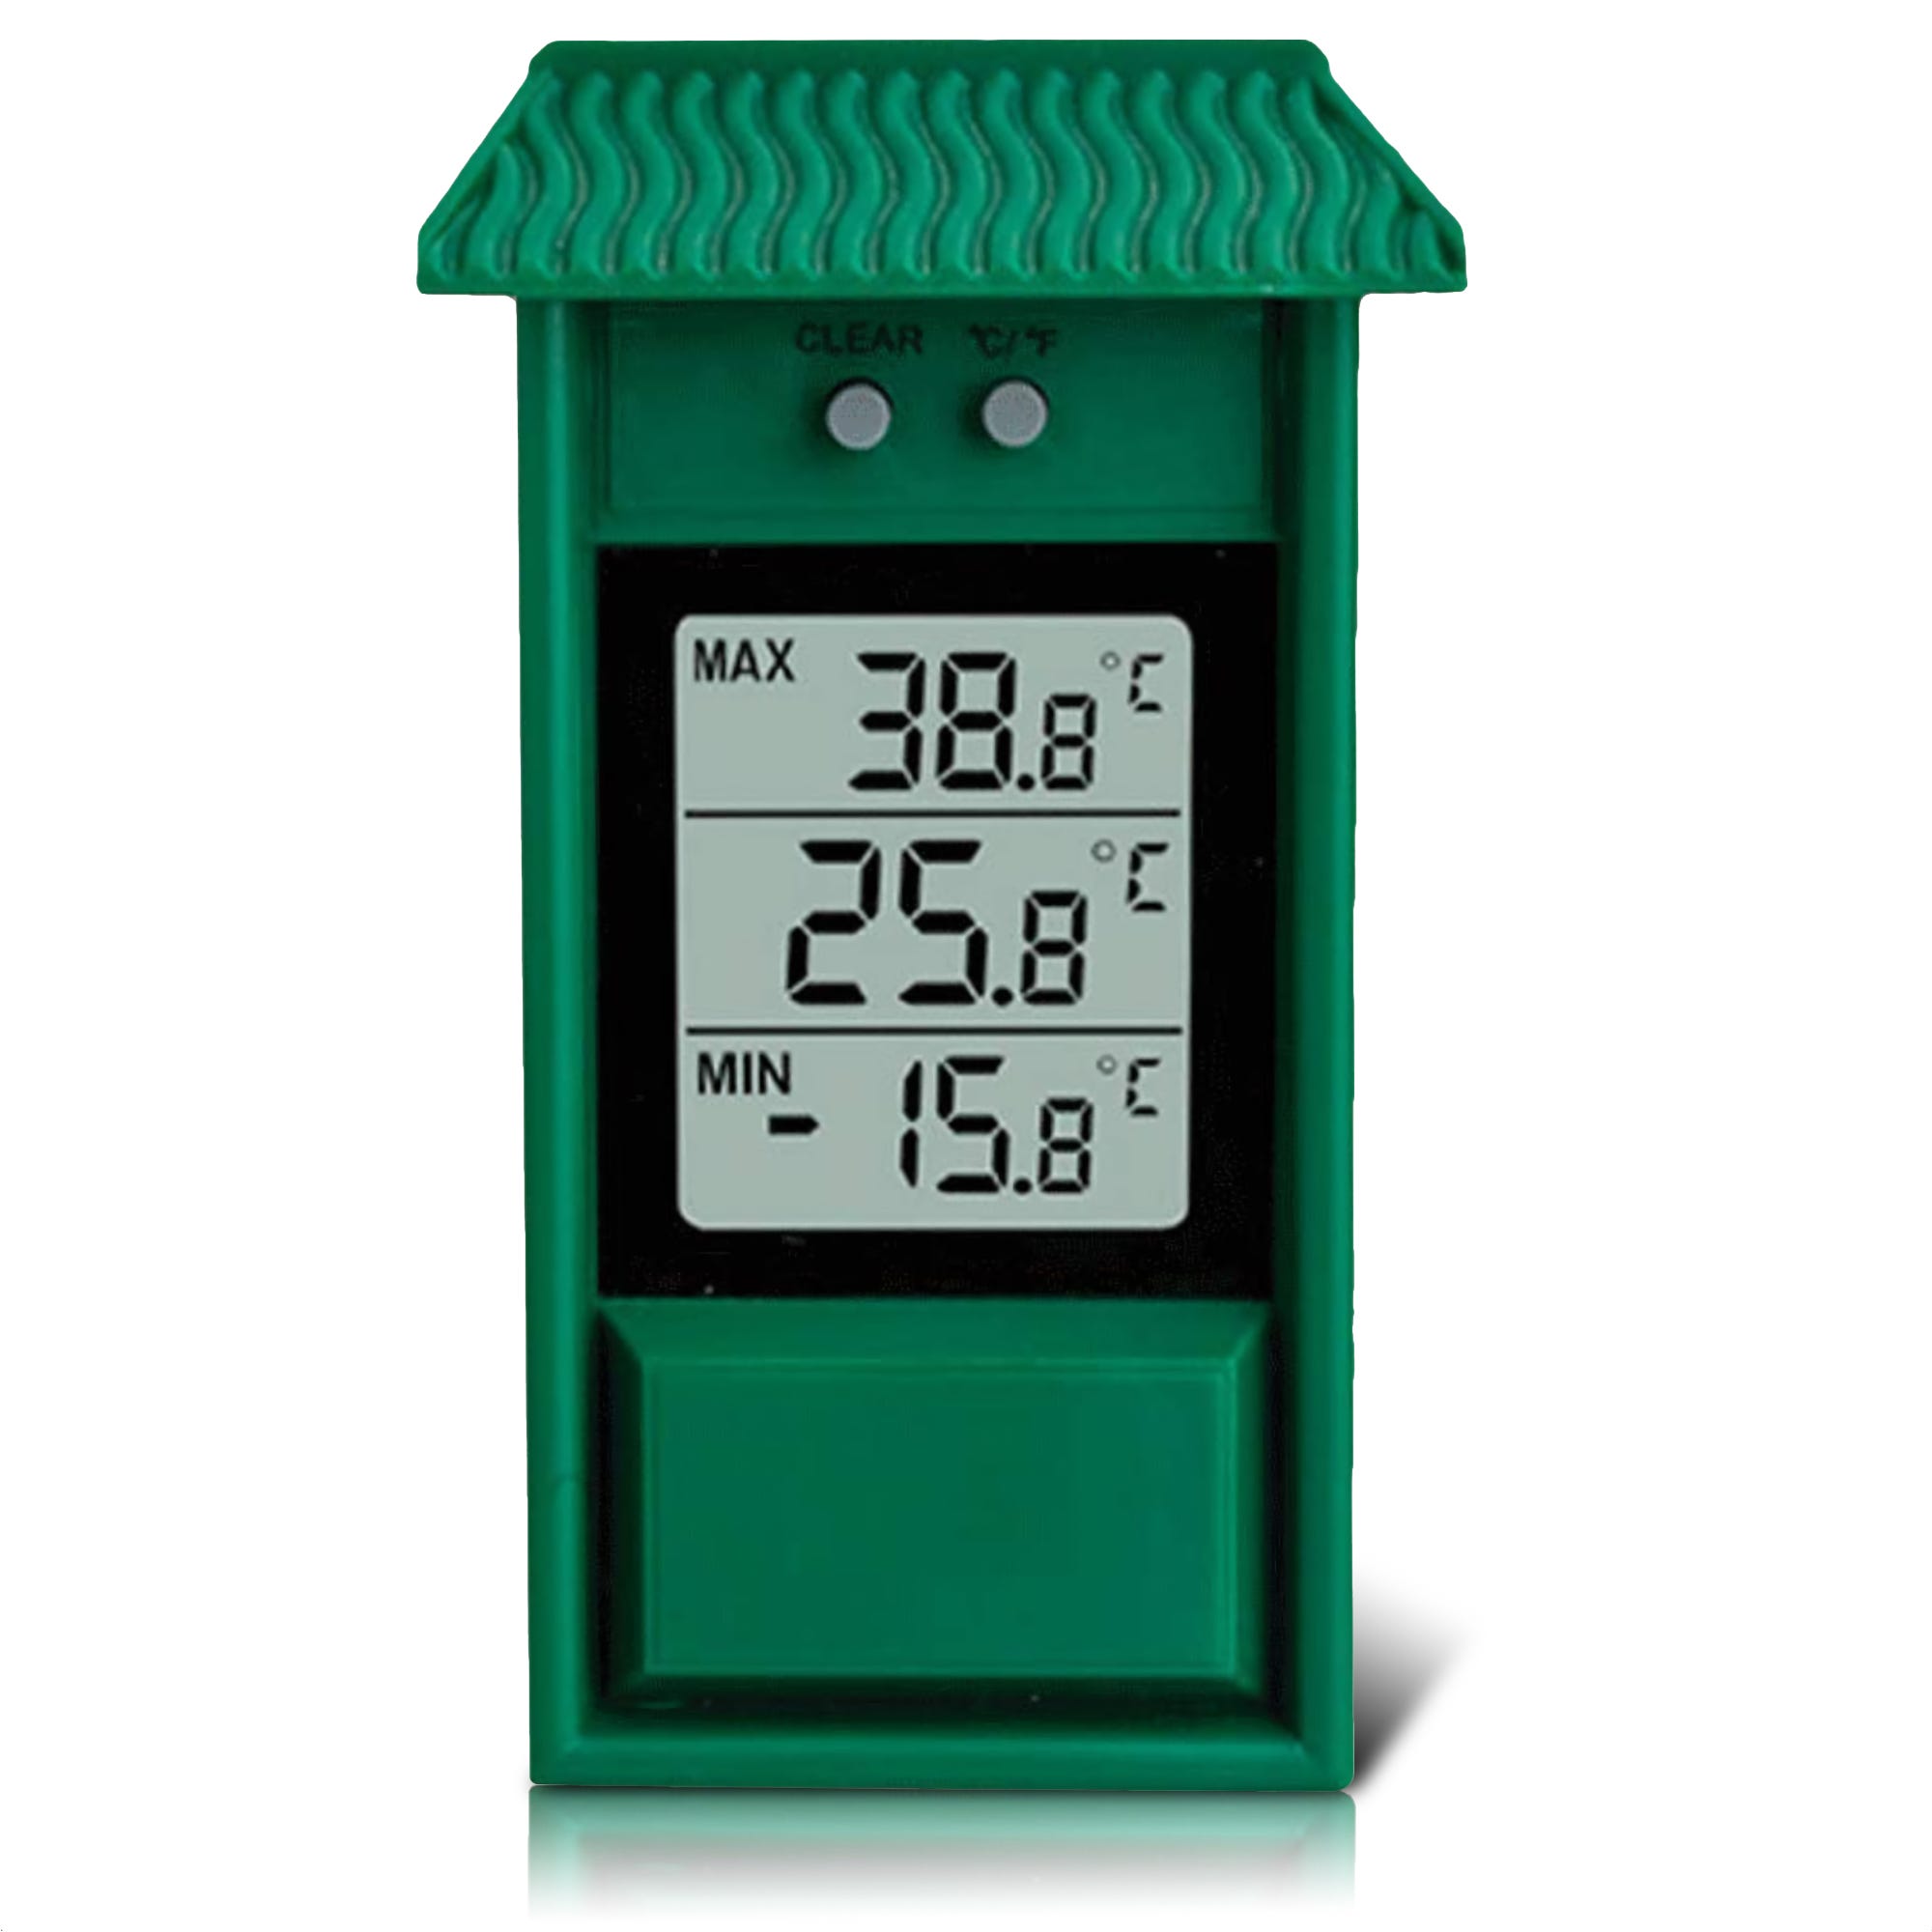 FISHTEC Thermometre Cabane Mini/Maxi - Lecture immediate - Memoire des  temperatures minimales et maximaes - IPX2 - Vert - Farhenheit ou Degres